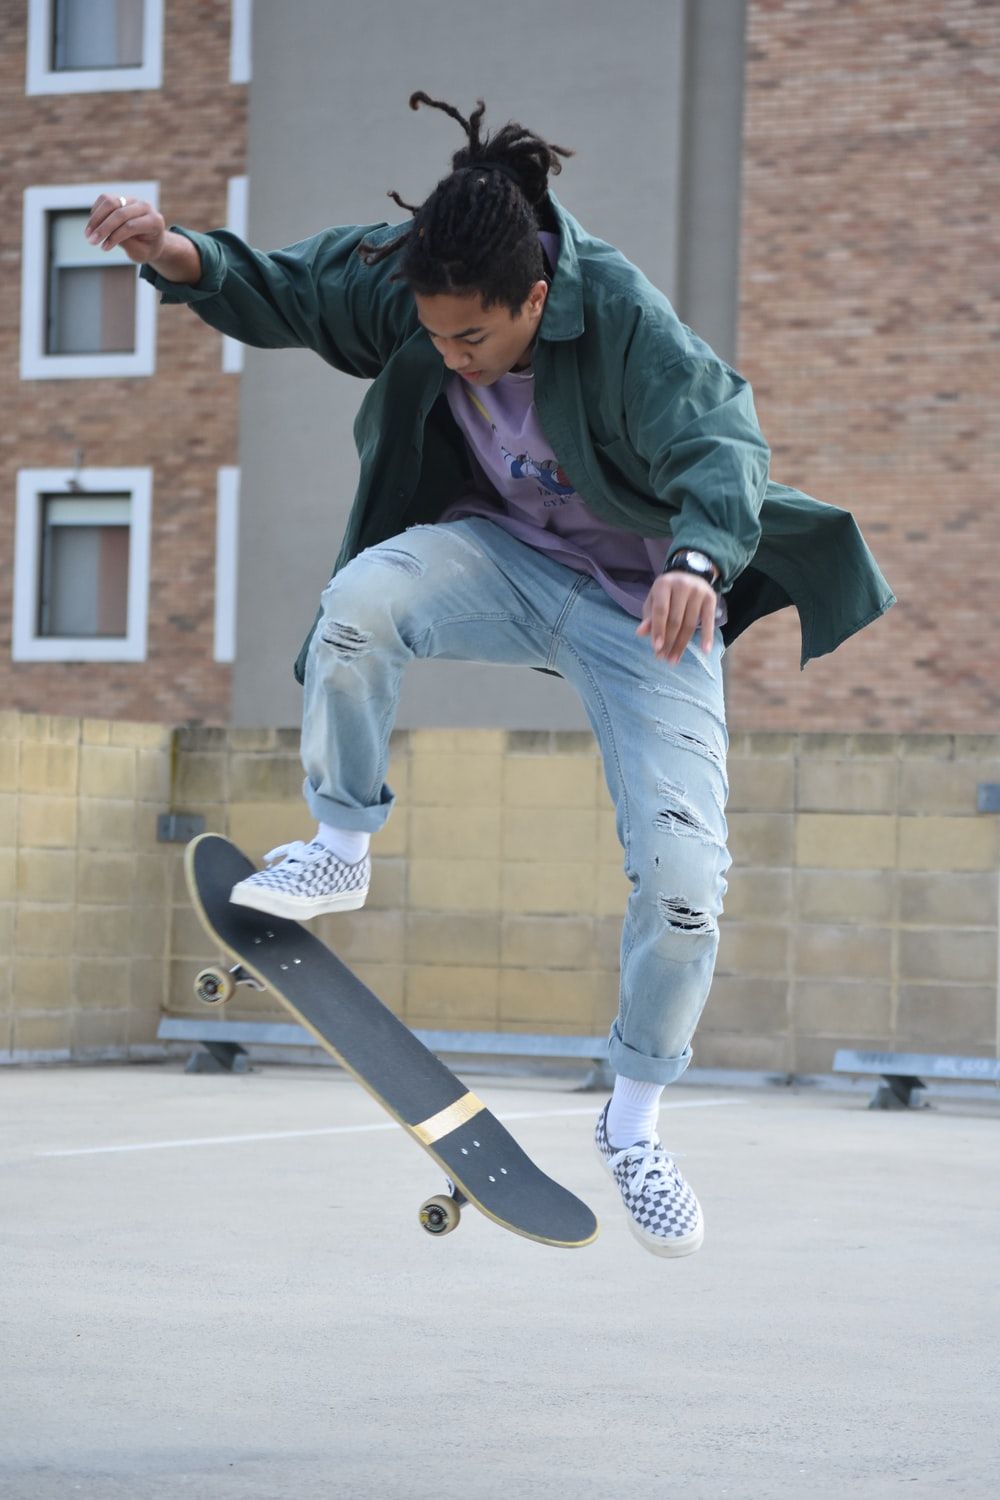 Skateboard Wallpaper: Free HD Download [HQ]